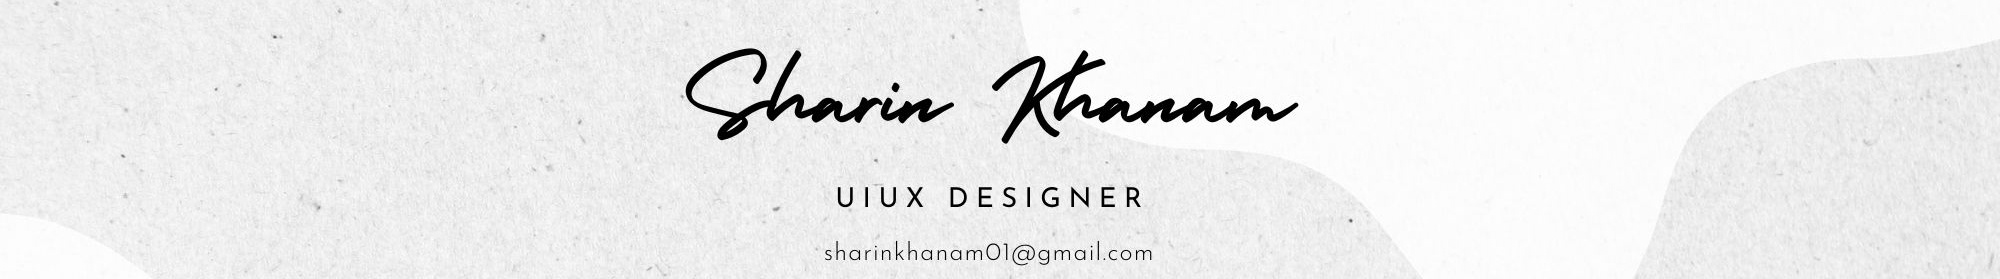 Sharin Khanam's profile banner